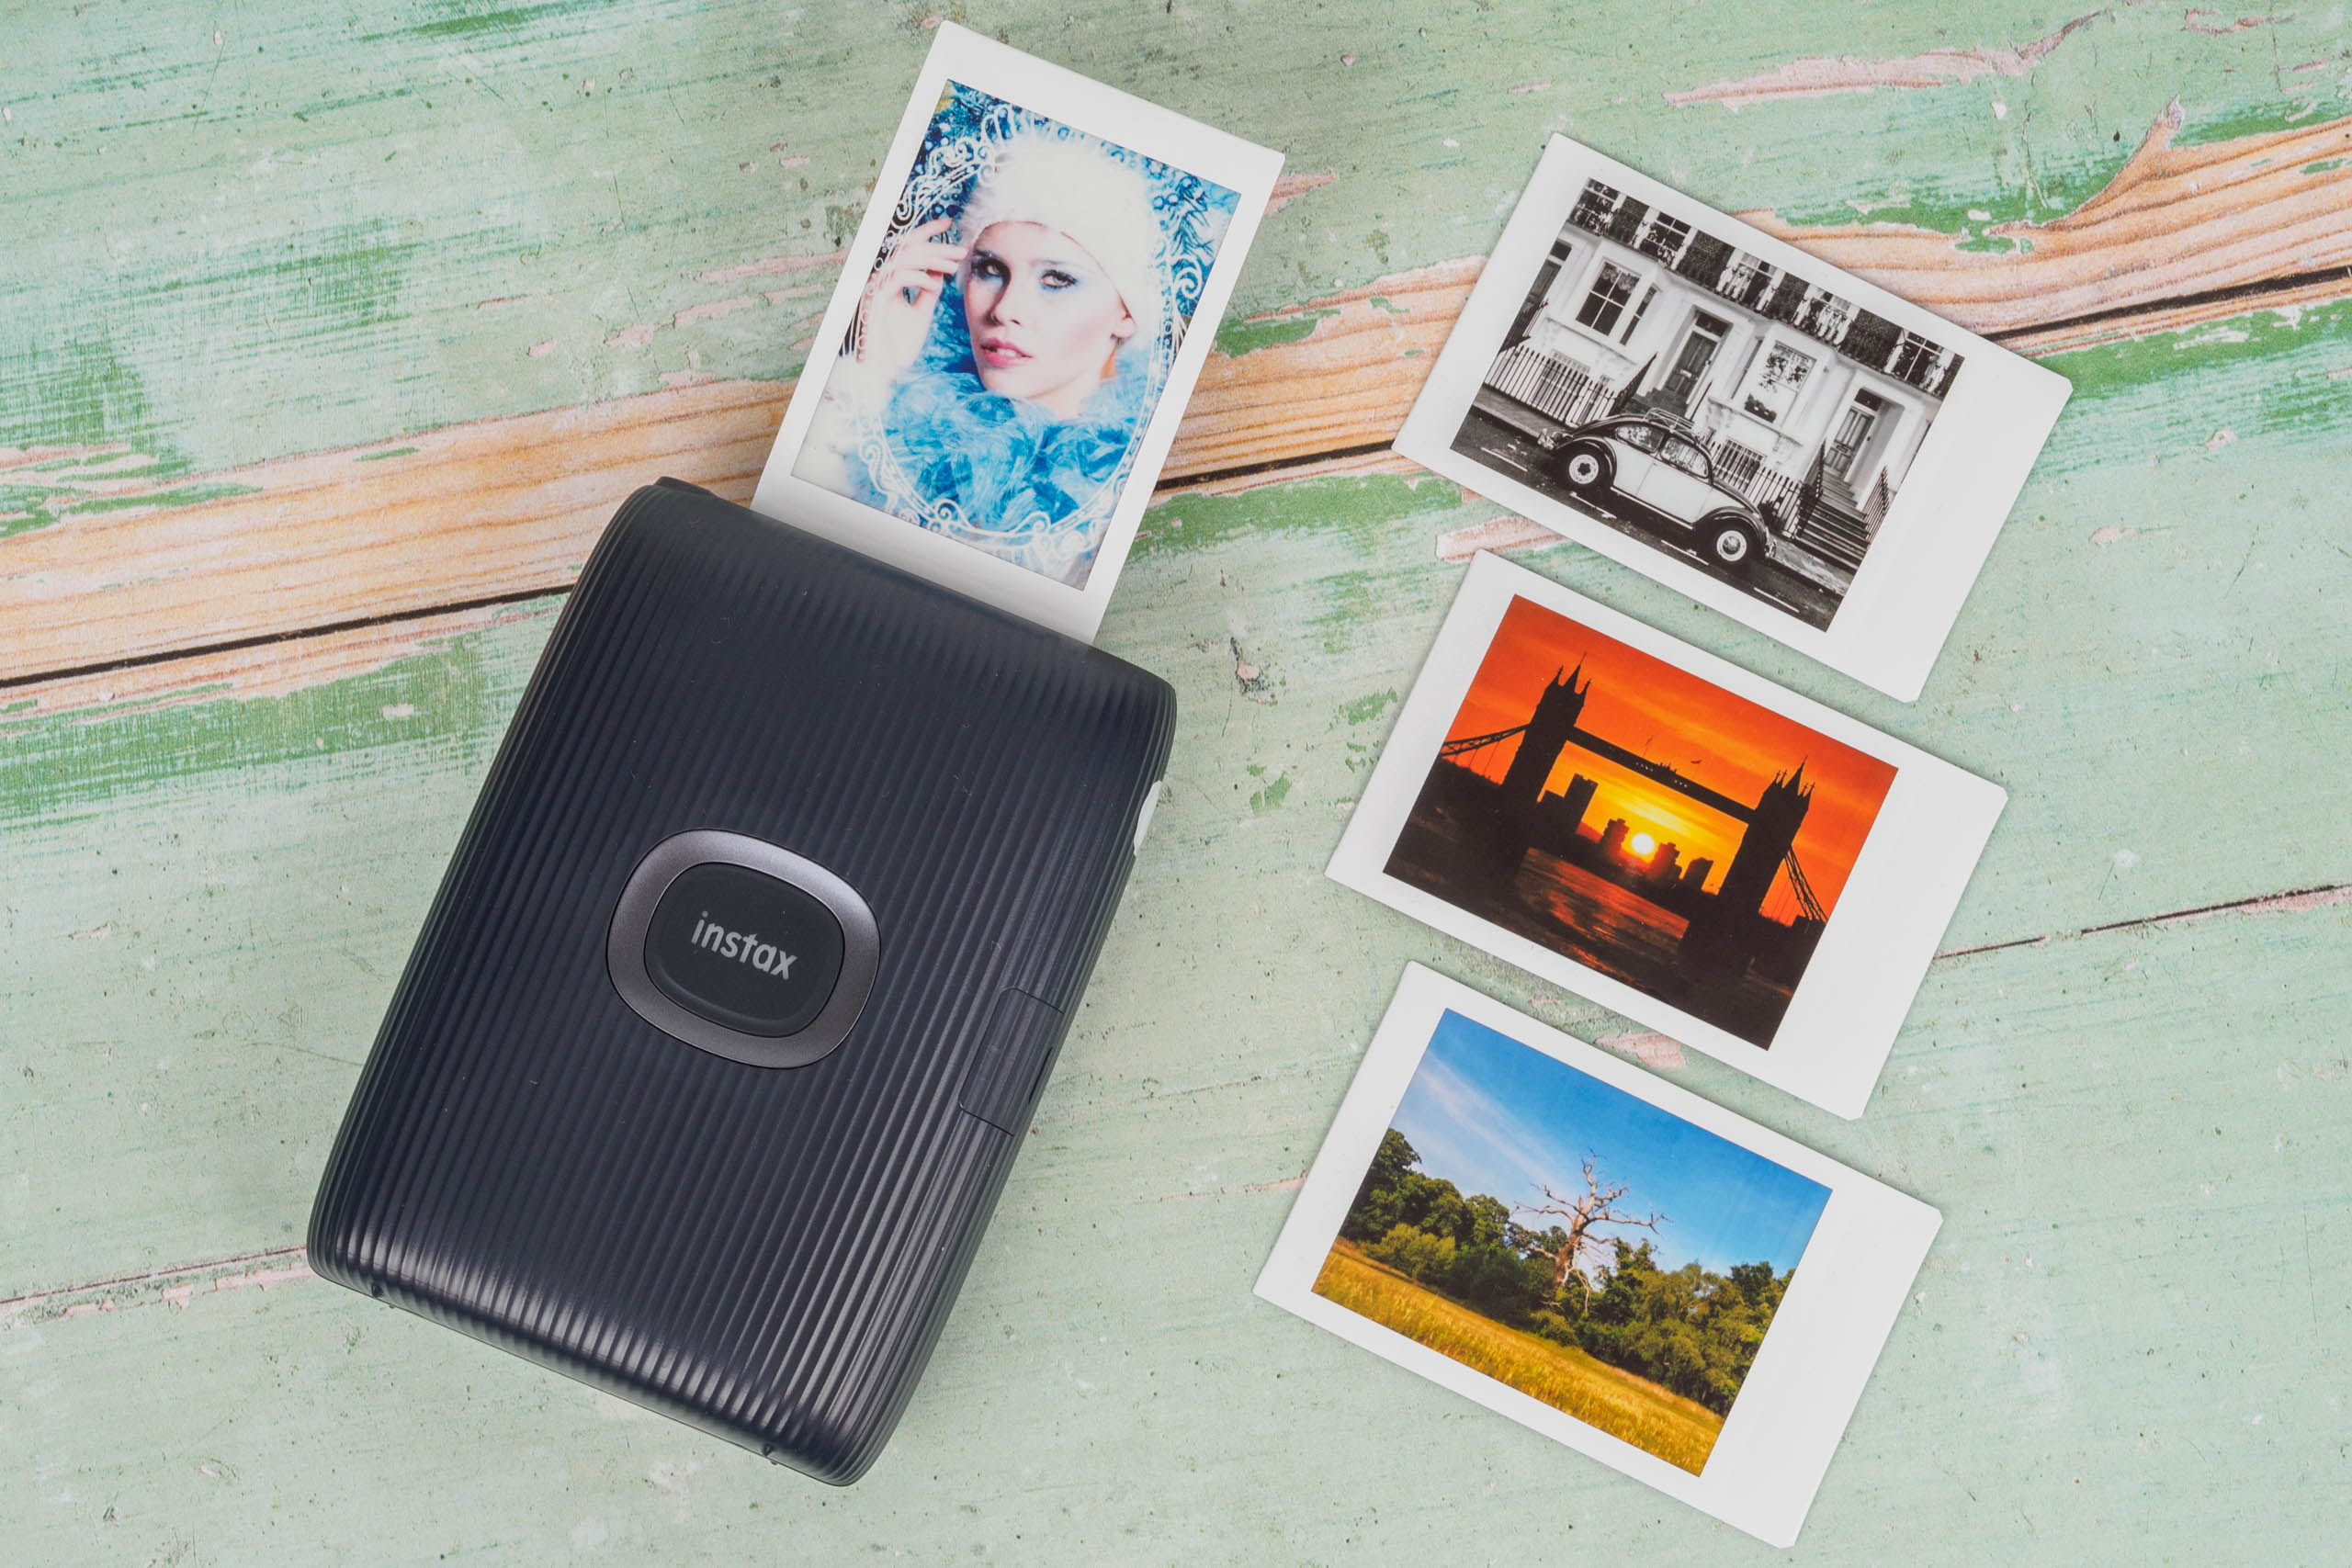 Fujifilm INSTAX mini Link review: INSTANT portable photo printer